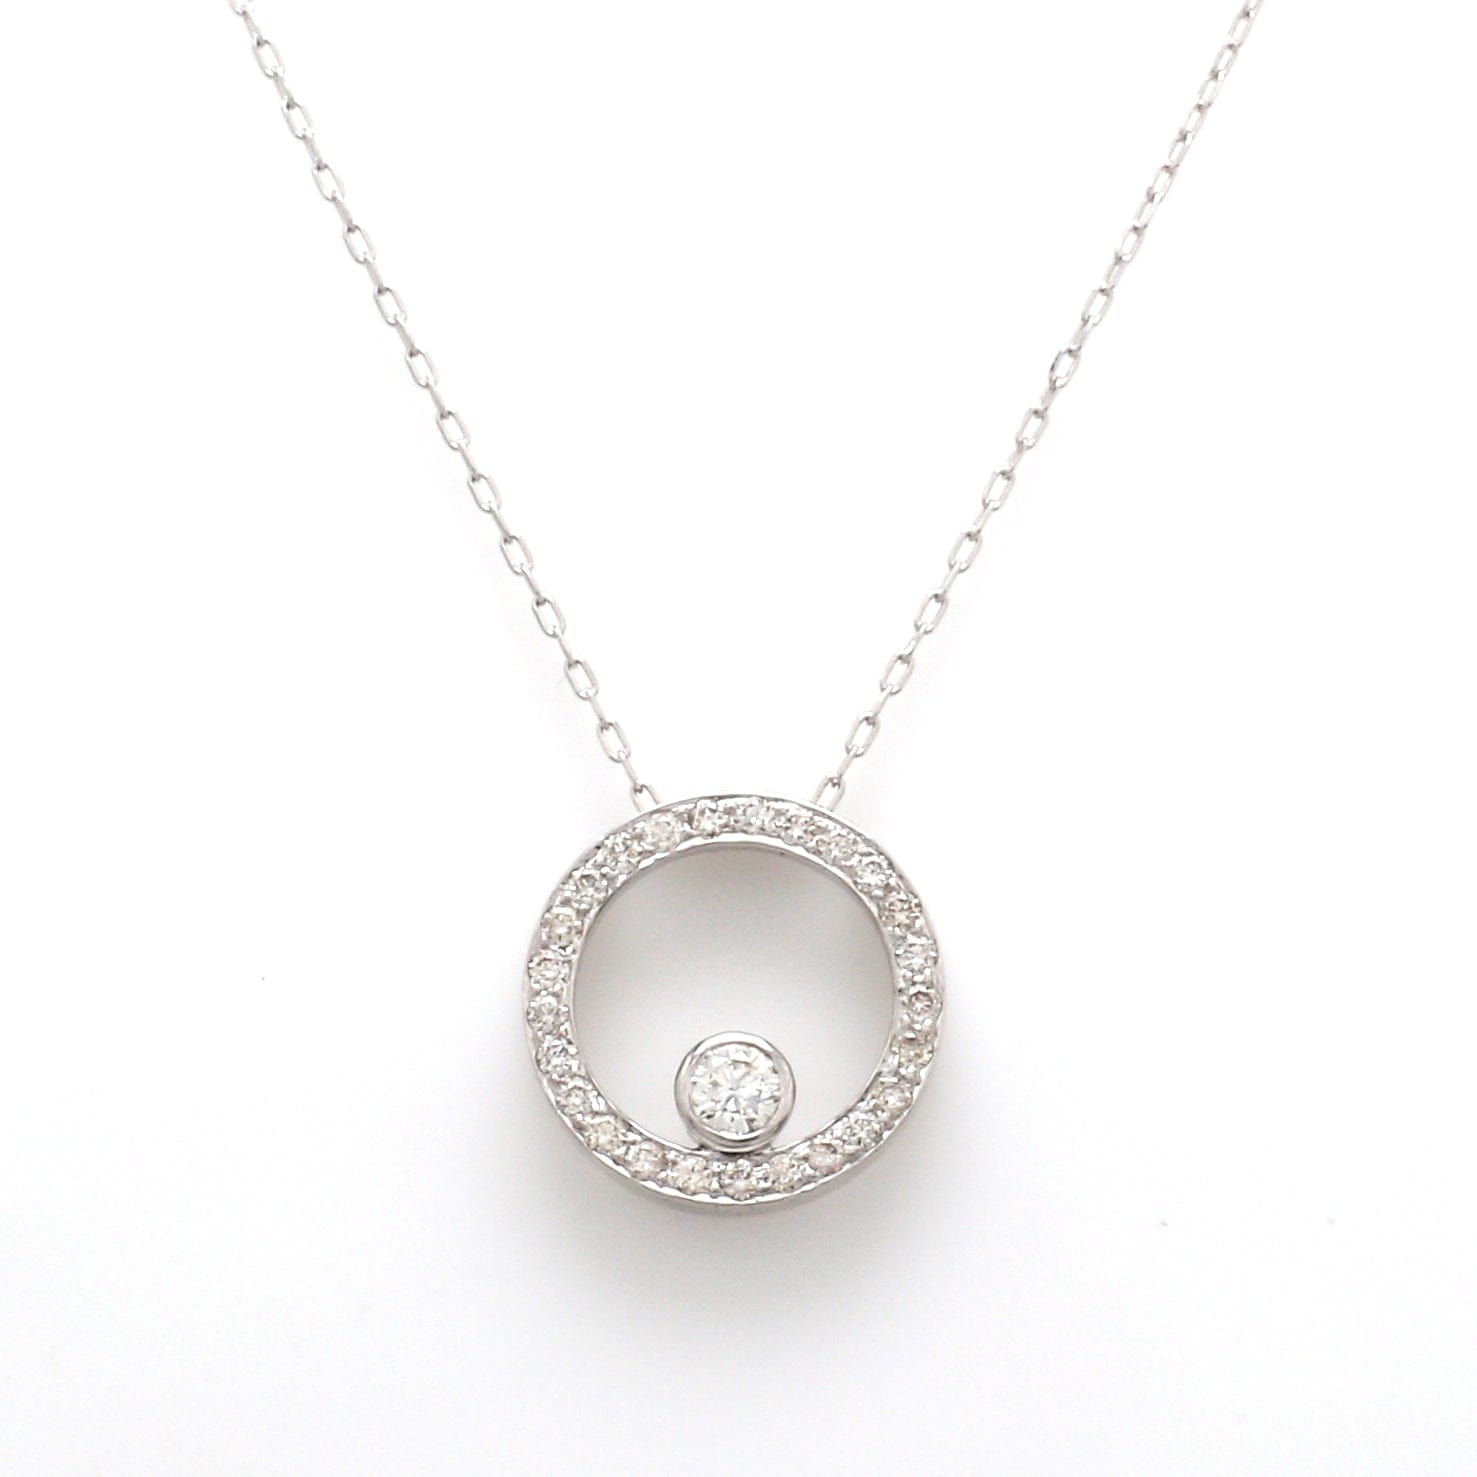 Medium Cross 14k White Gold Pendant Necklace in White Diamond | Kendra Scott